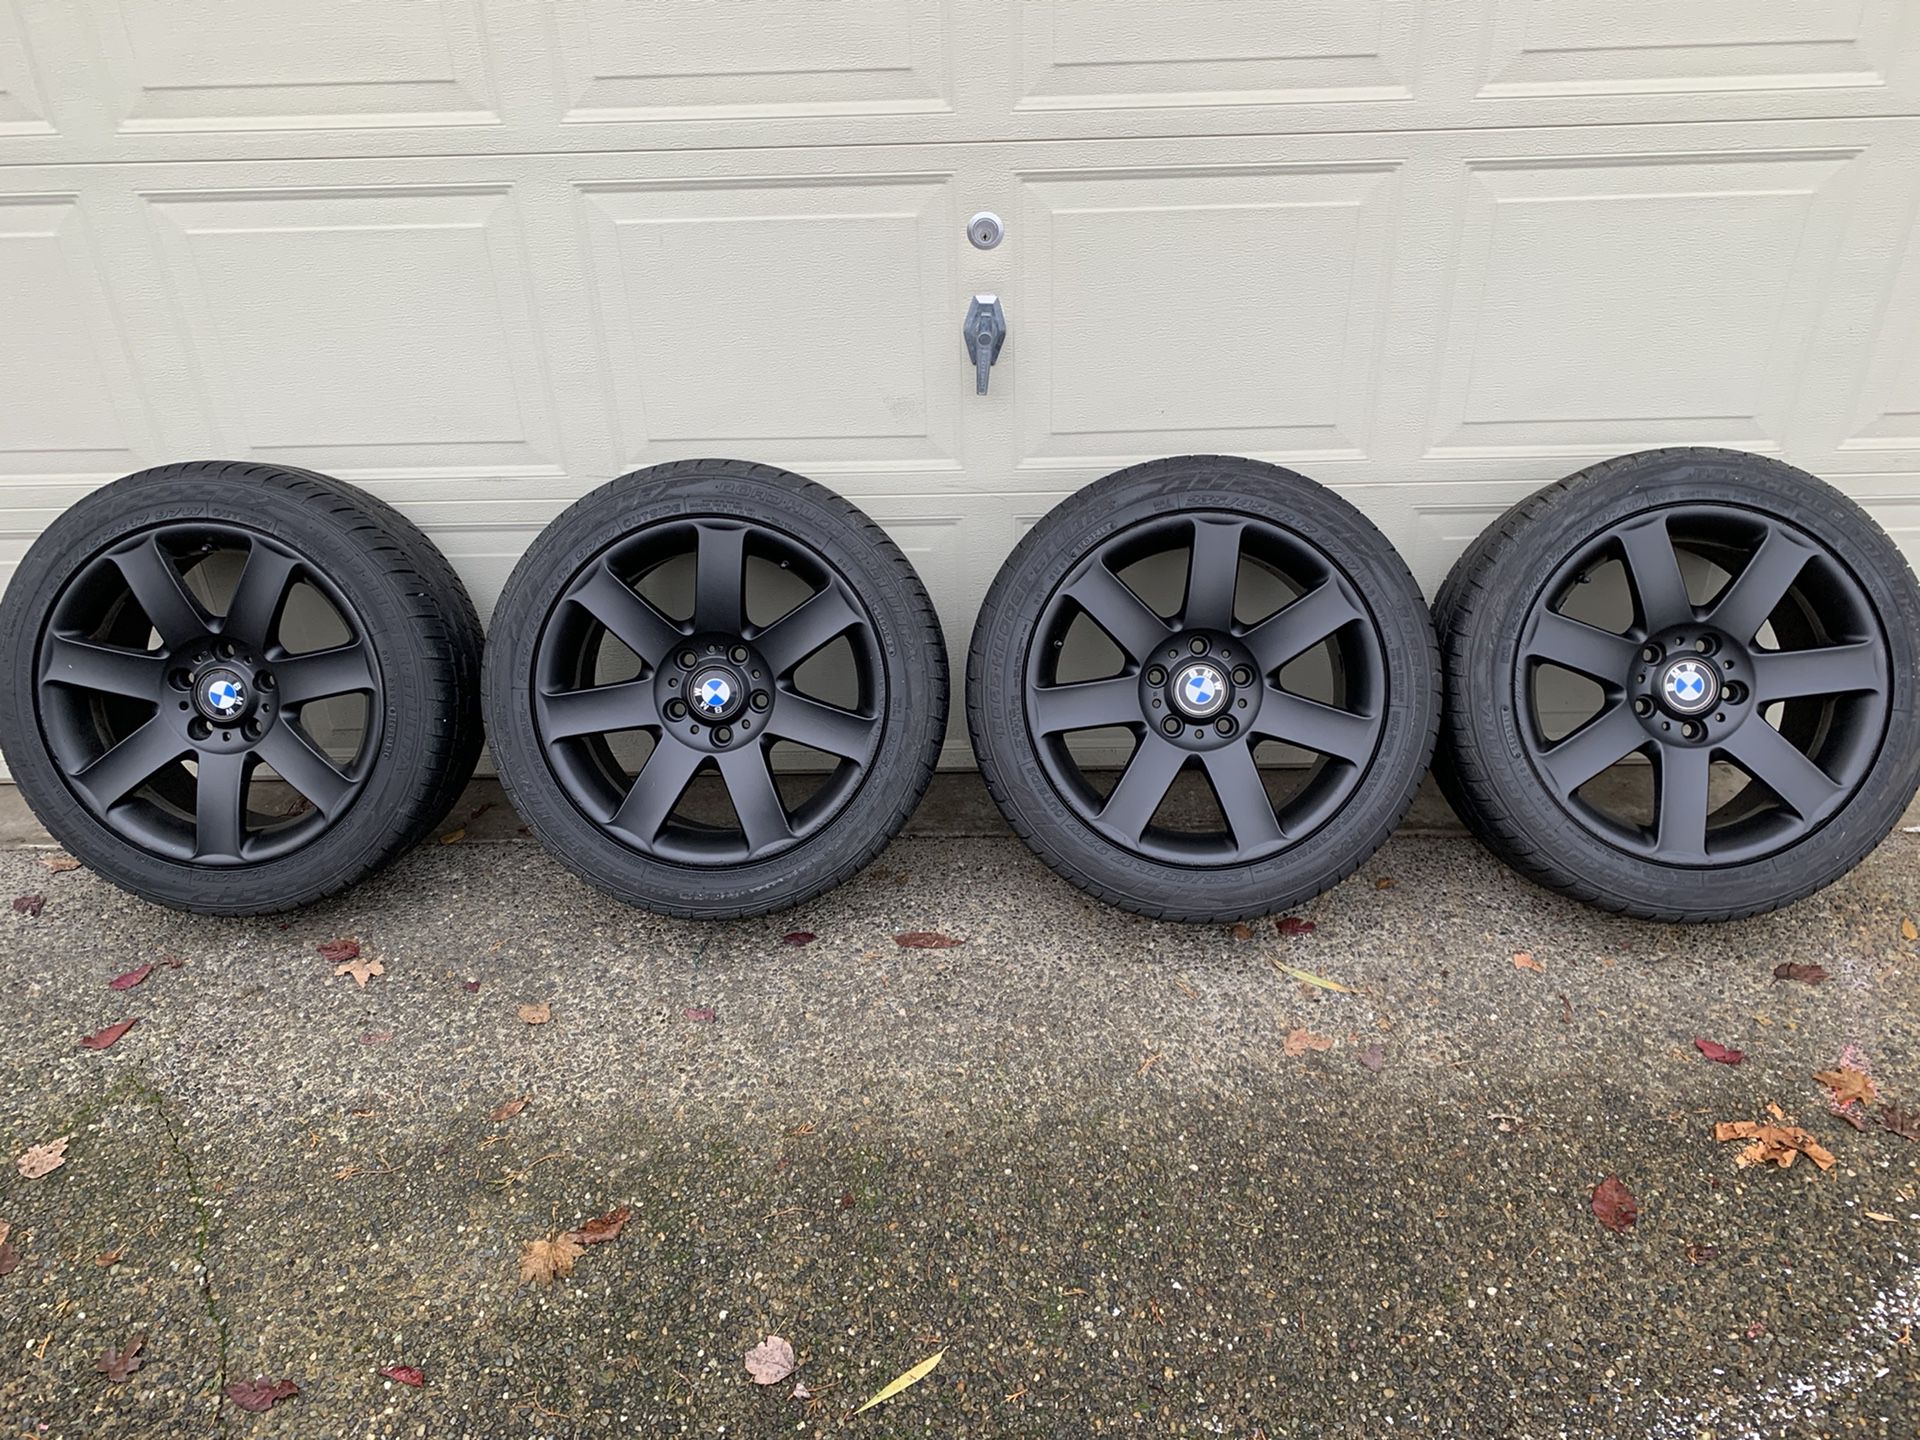 BMW OEM 17”x8” Wheels W/ 90% Tread Roadhugger Tires! (Set Of 4) 5x120 Bolt Pattern